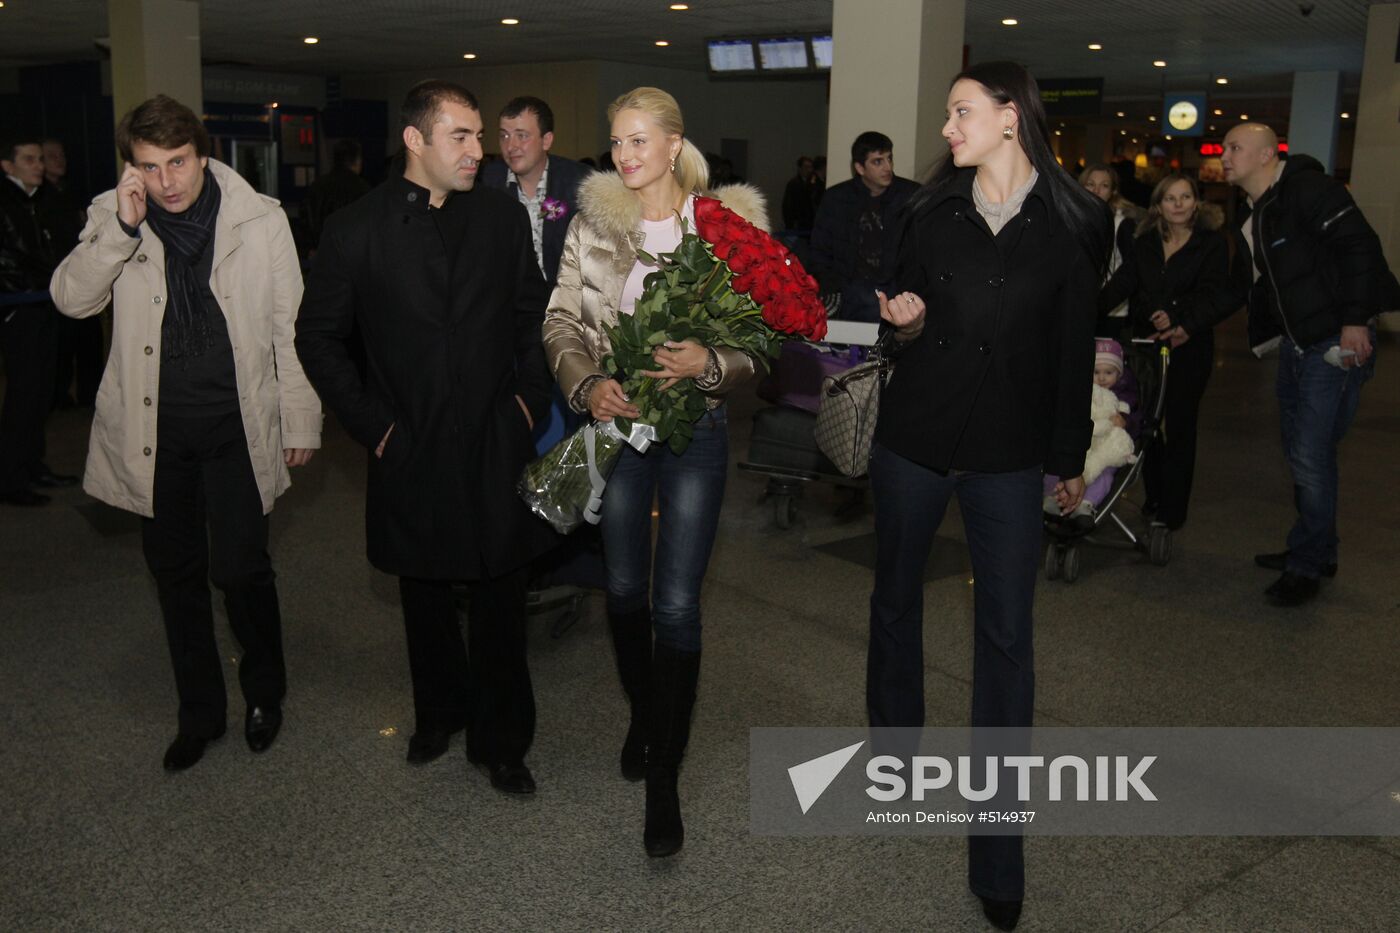 Mrs. World 2009 Victoria Radochinskaya returns to Moscow